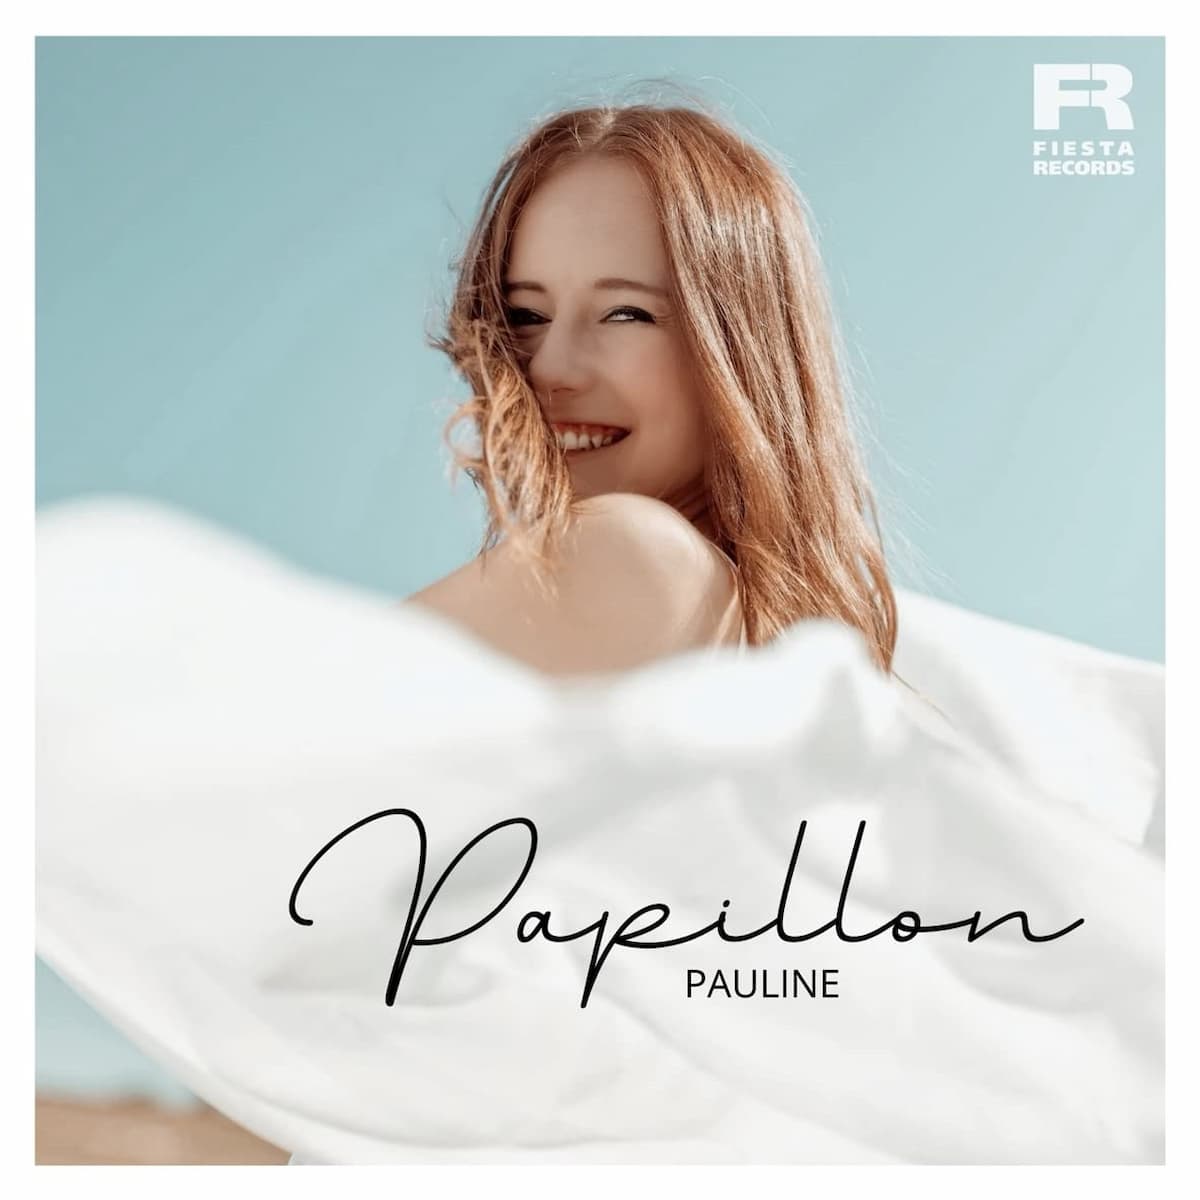 Pauline CD 2022 "Papillon"